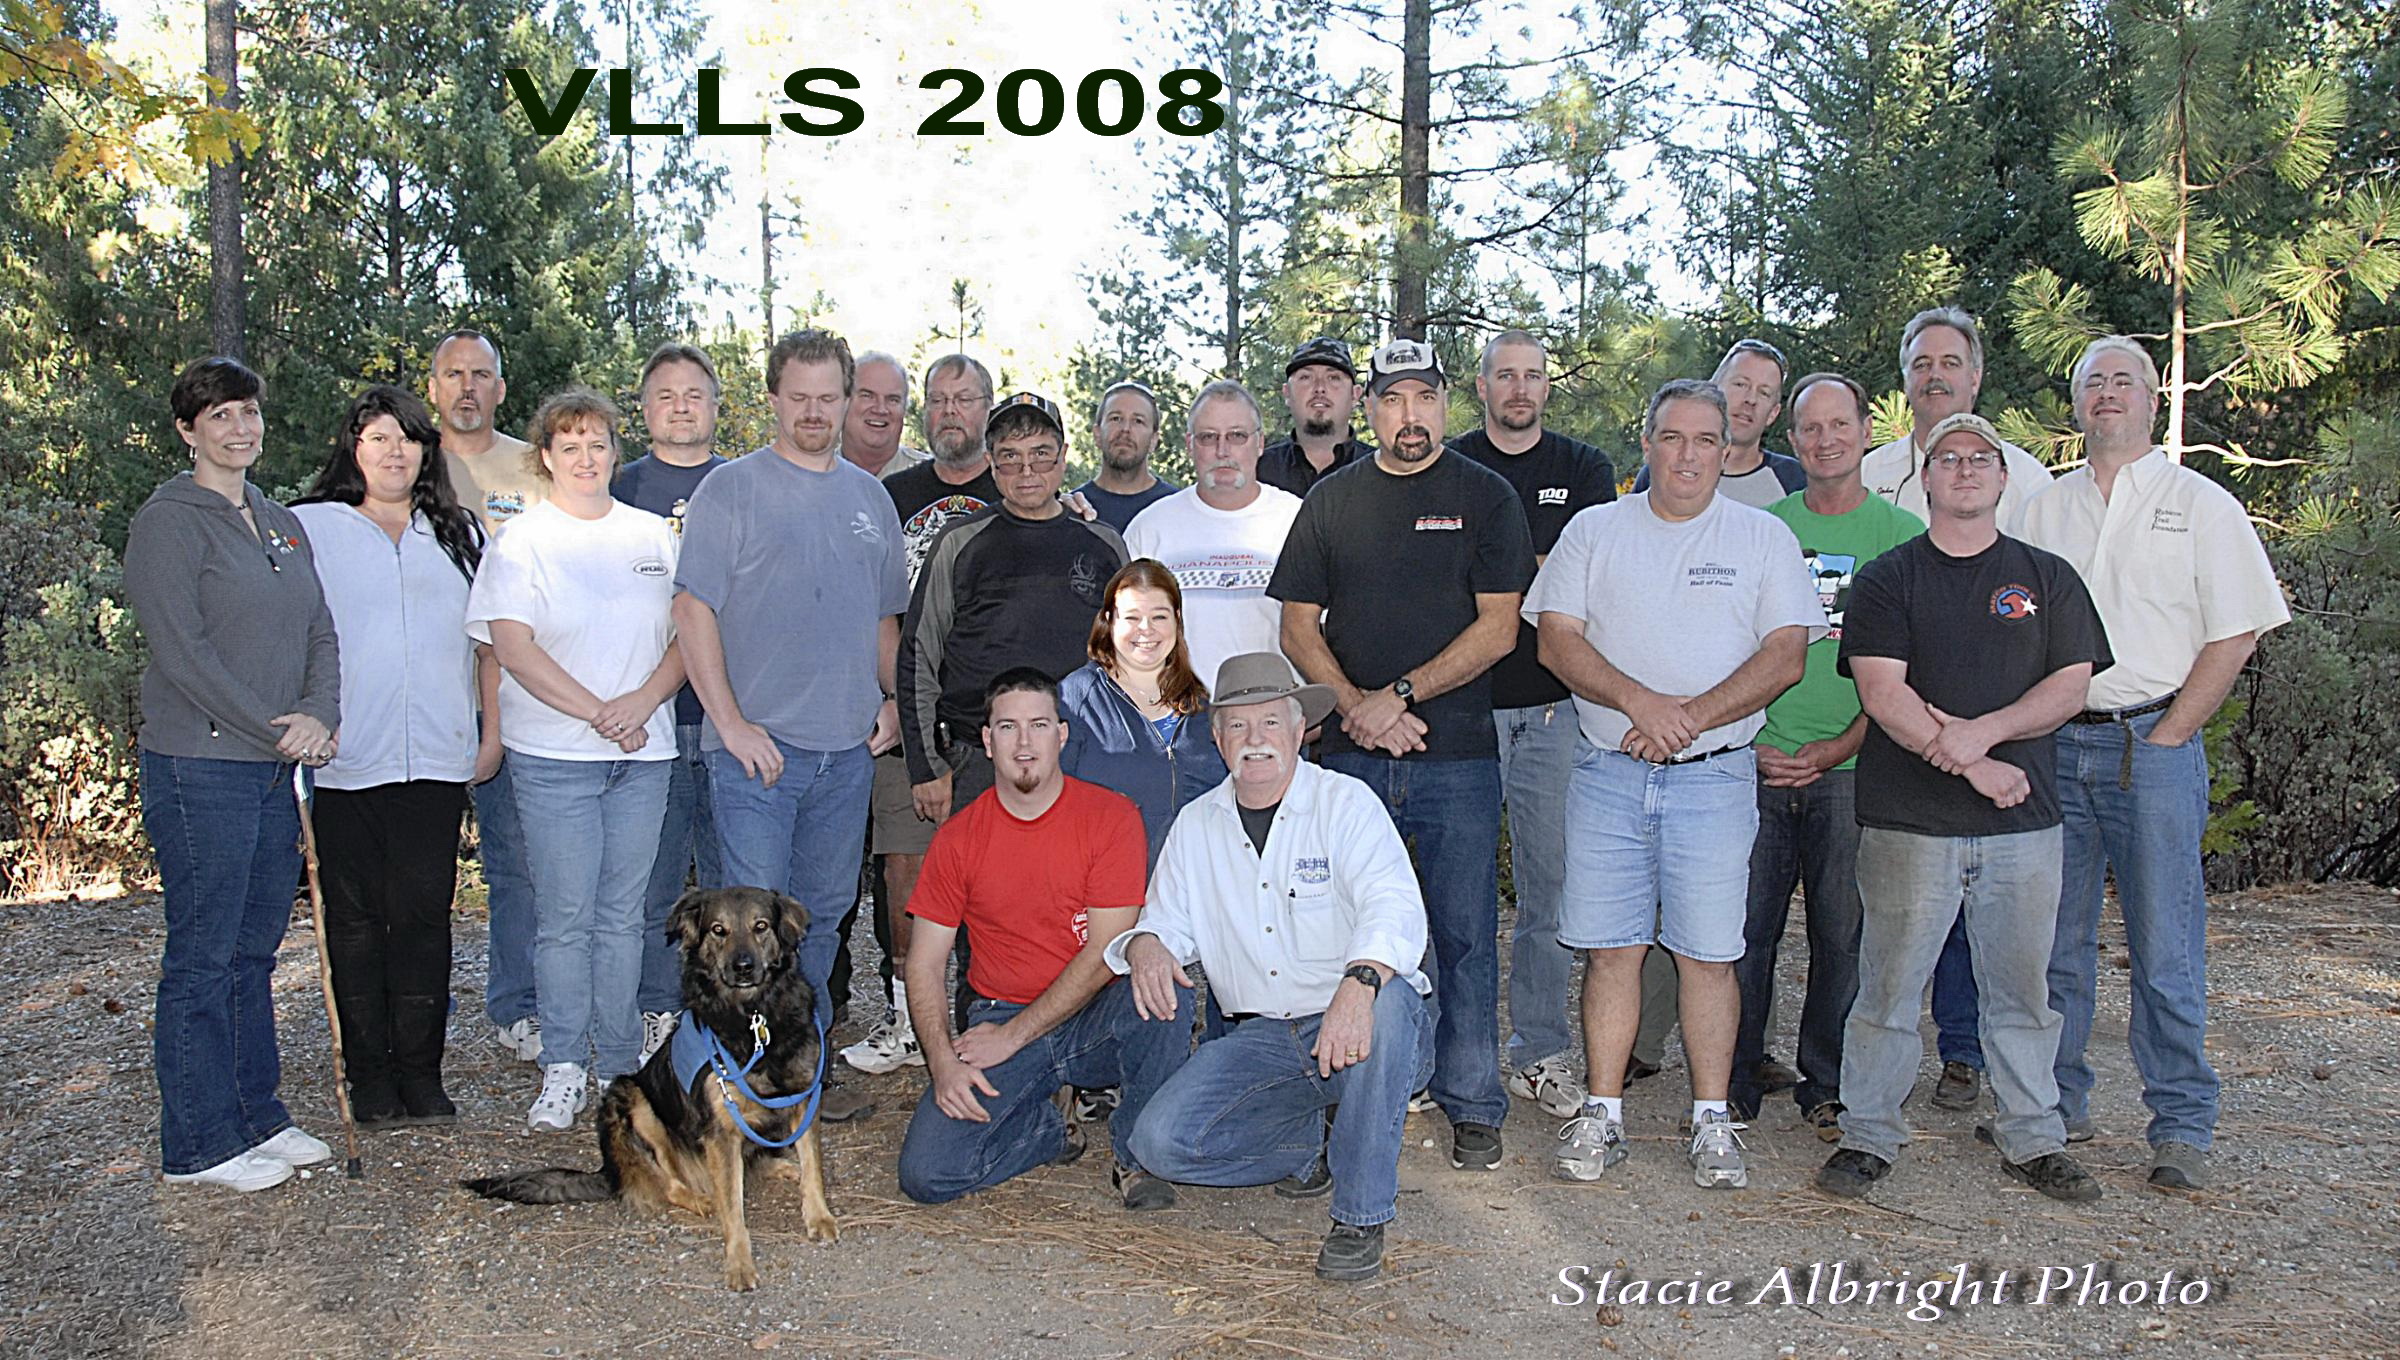 VLLS 2008 Class Picture